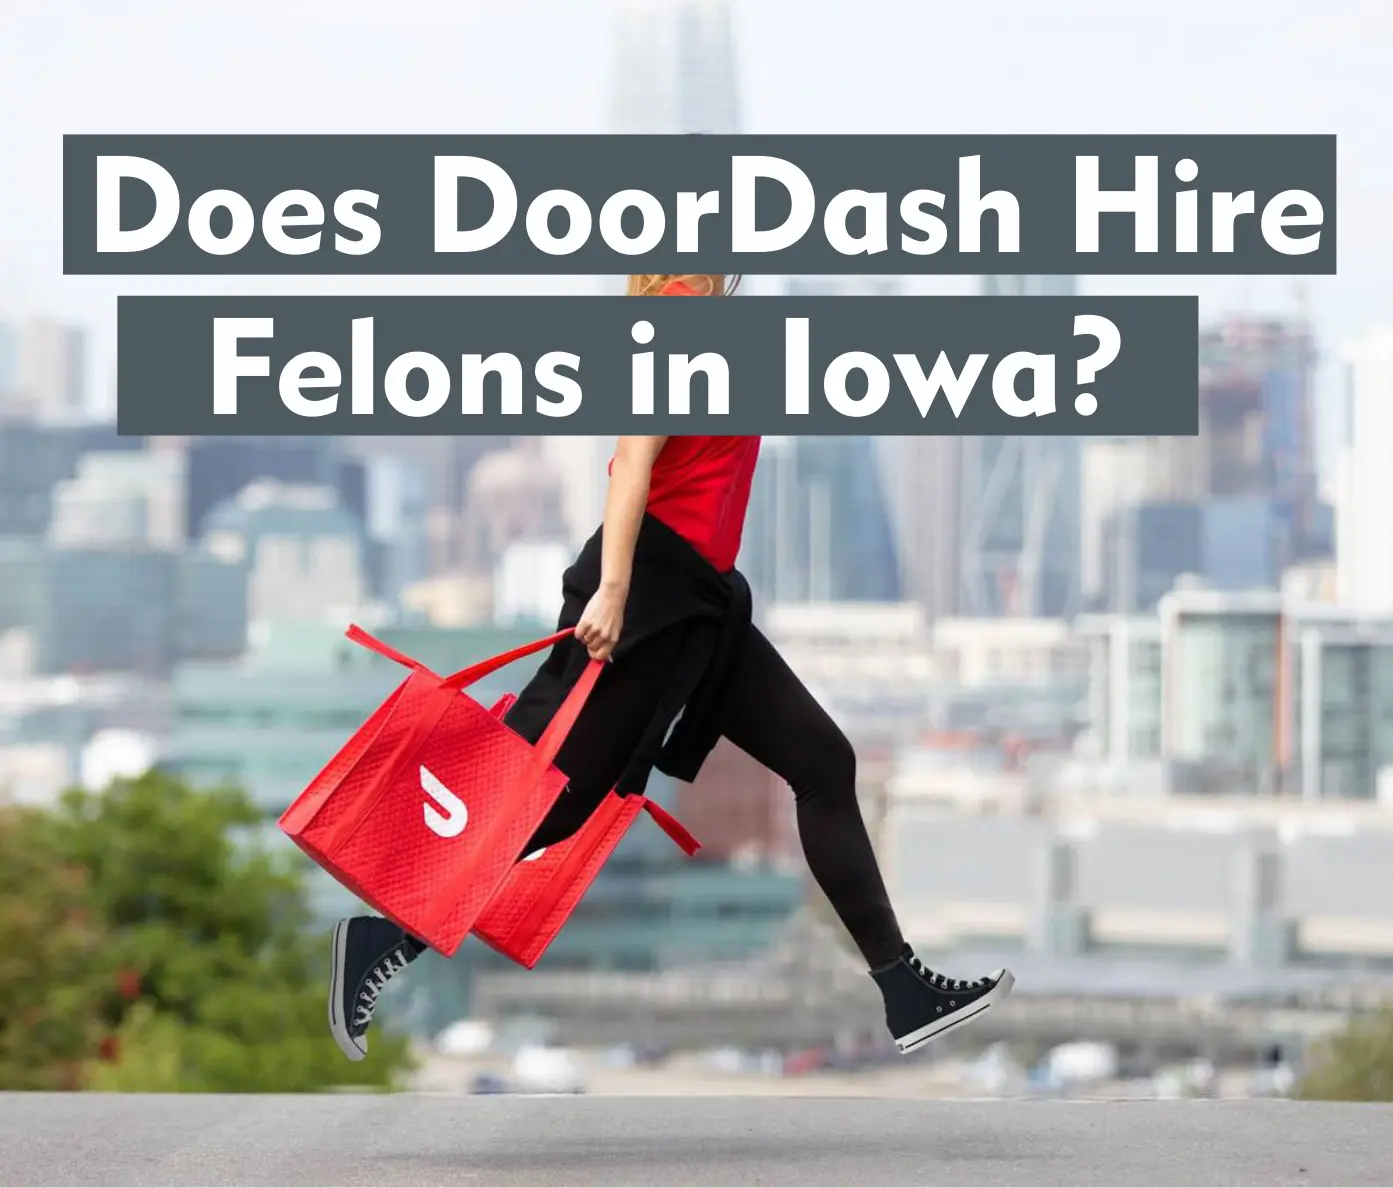 Does DoorDash Hire Felons in Iowa?